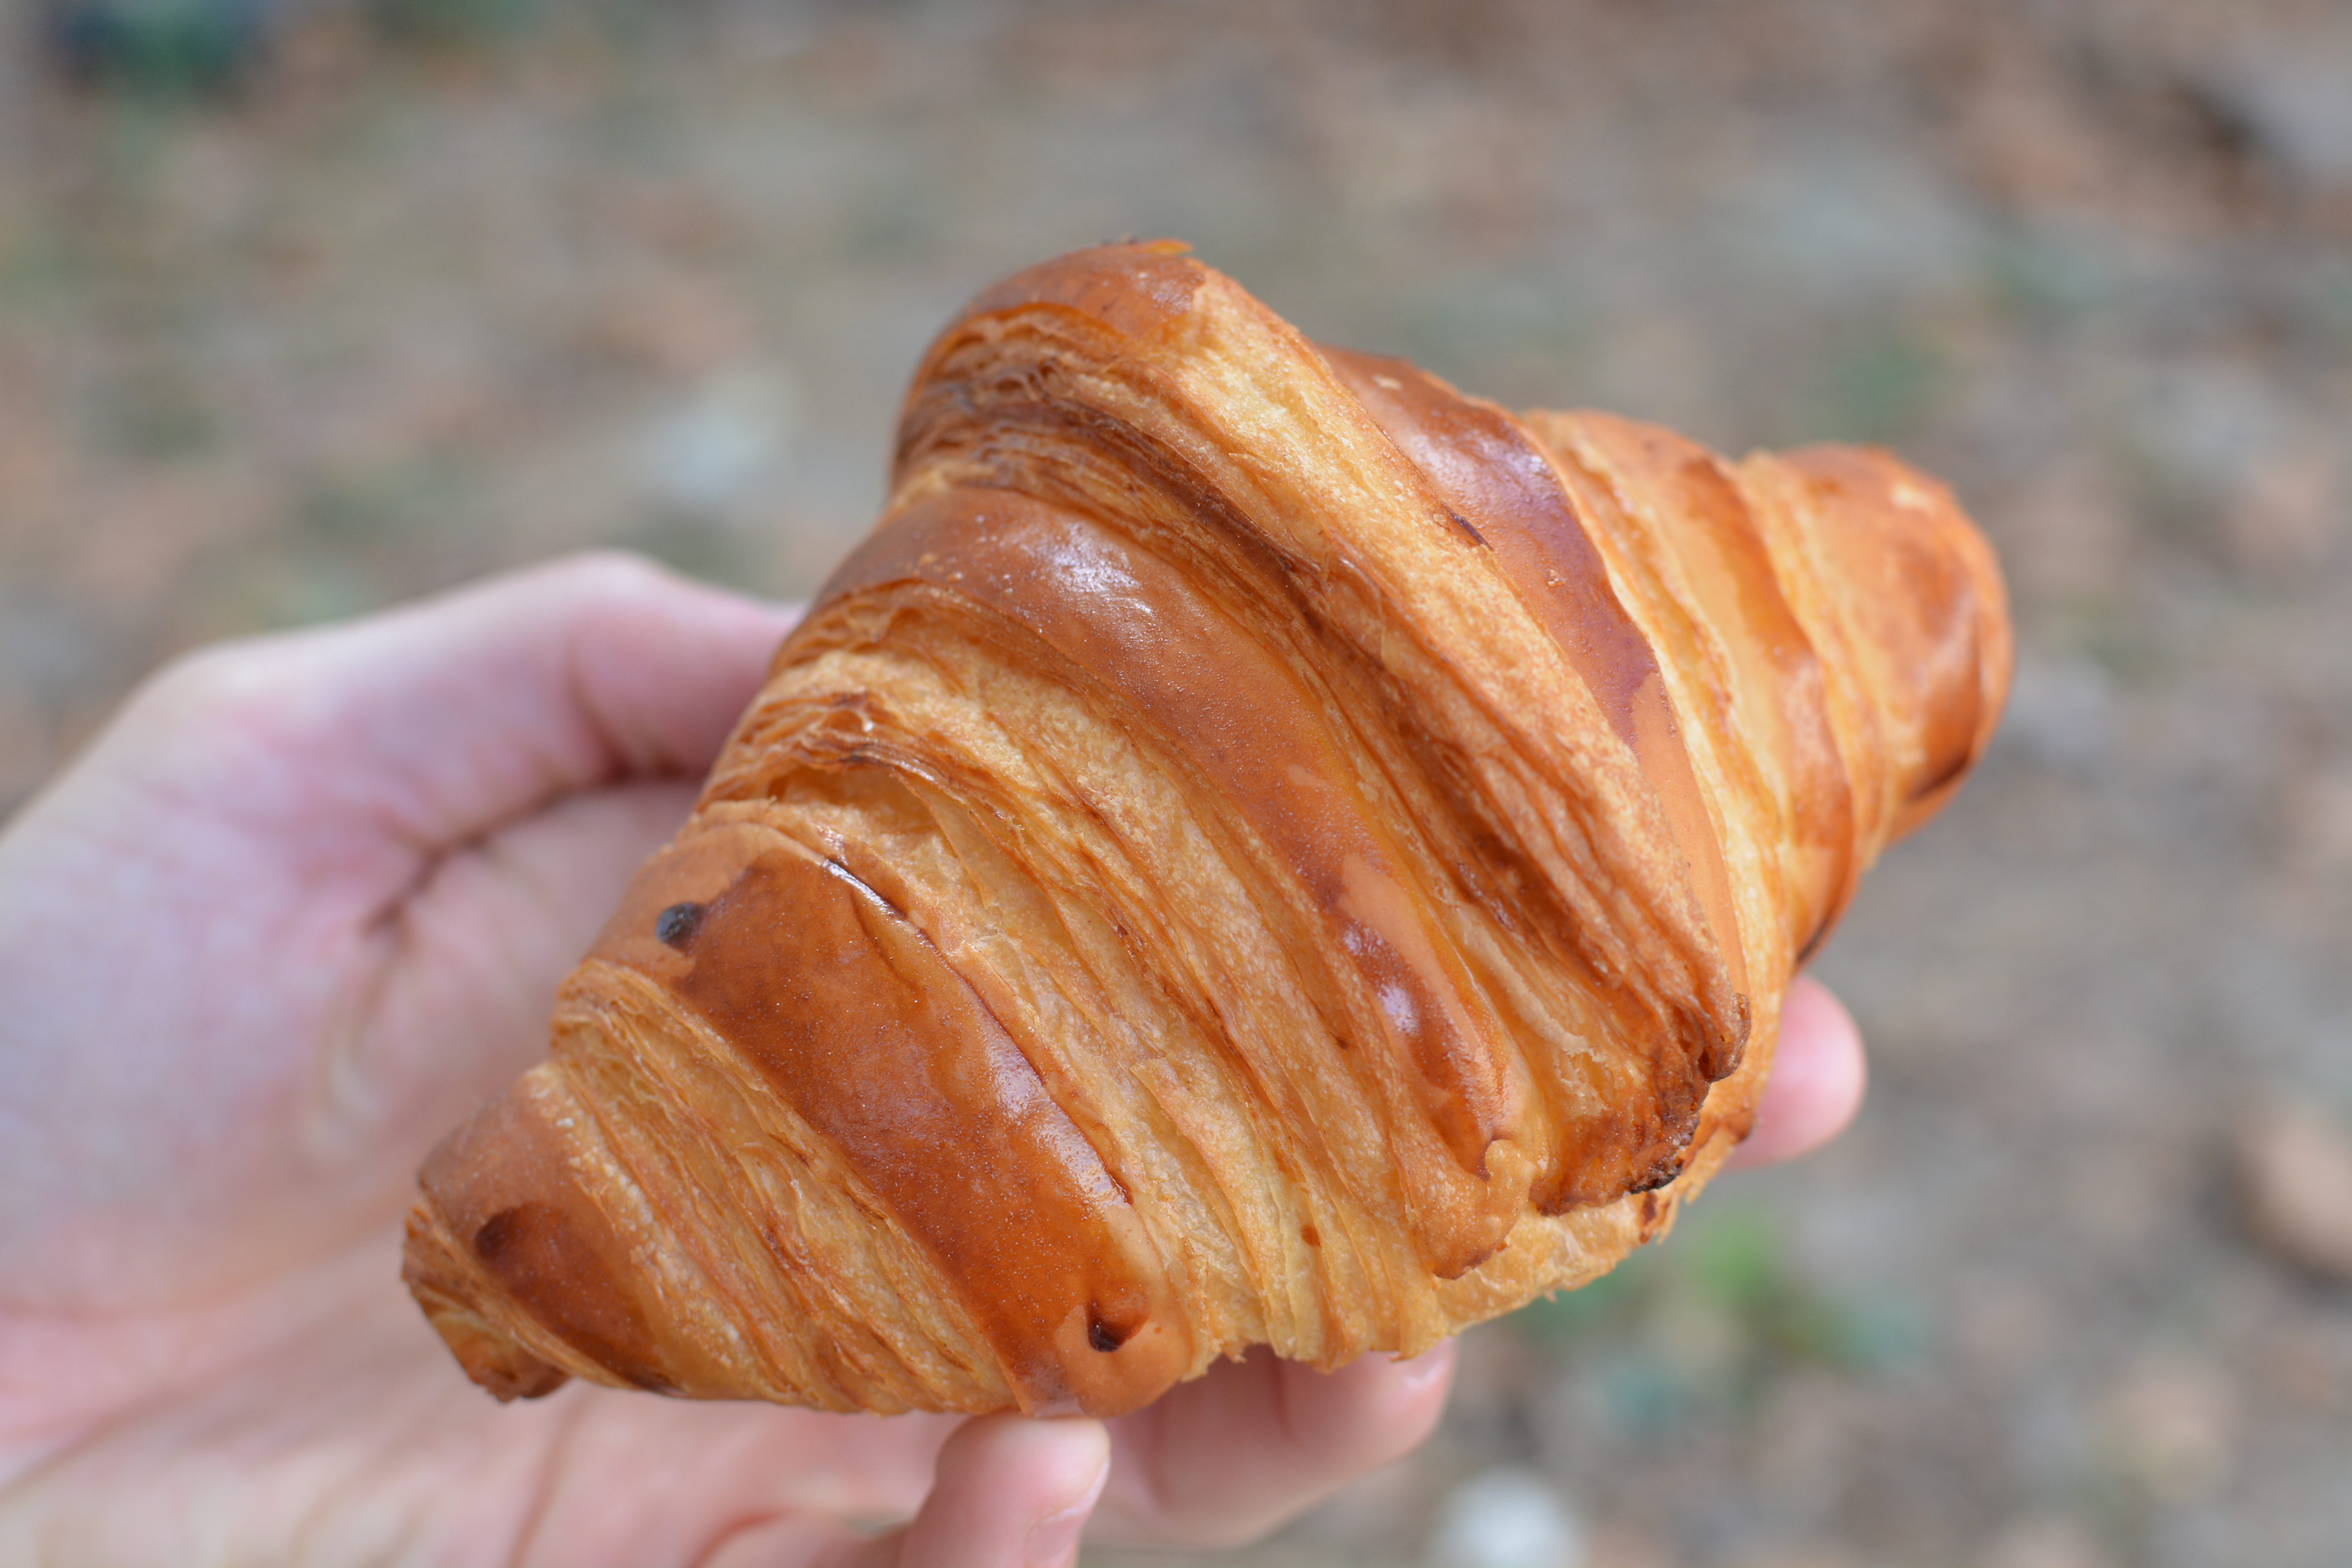 A croissant in a hand/https://leserialpatissteur.com